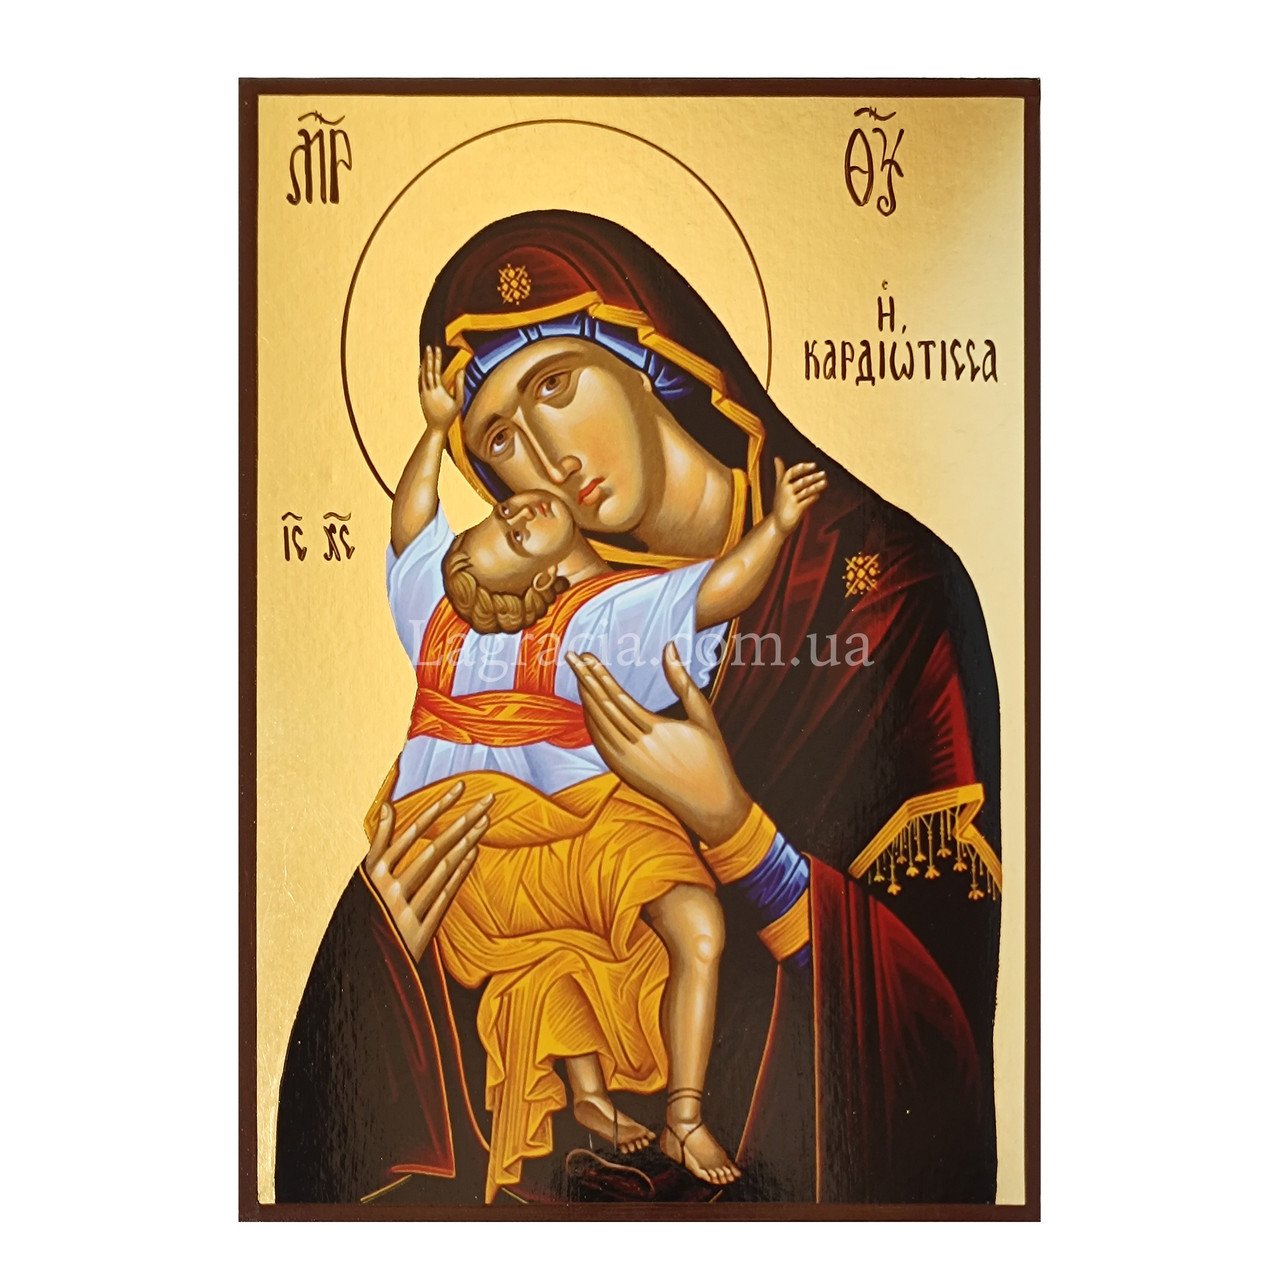 Ікона Божа Матір Сердечна (Кардіотісса) 20 Х 26 см